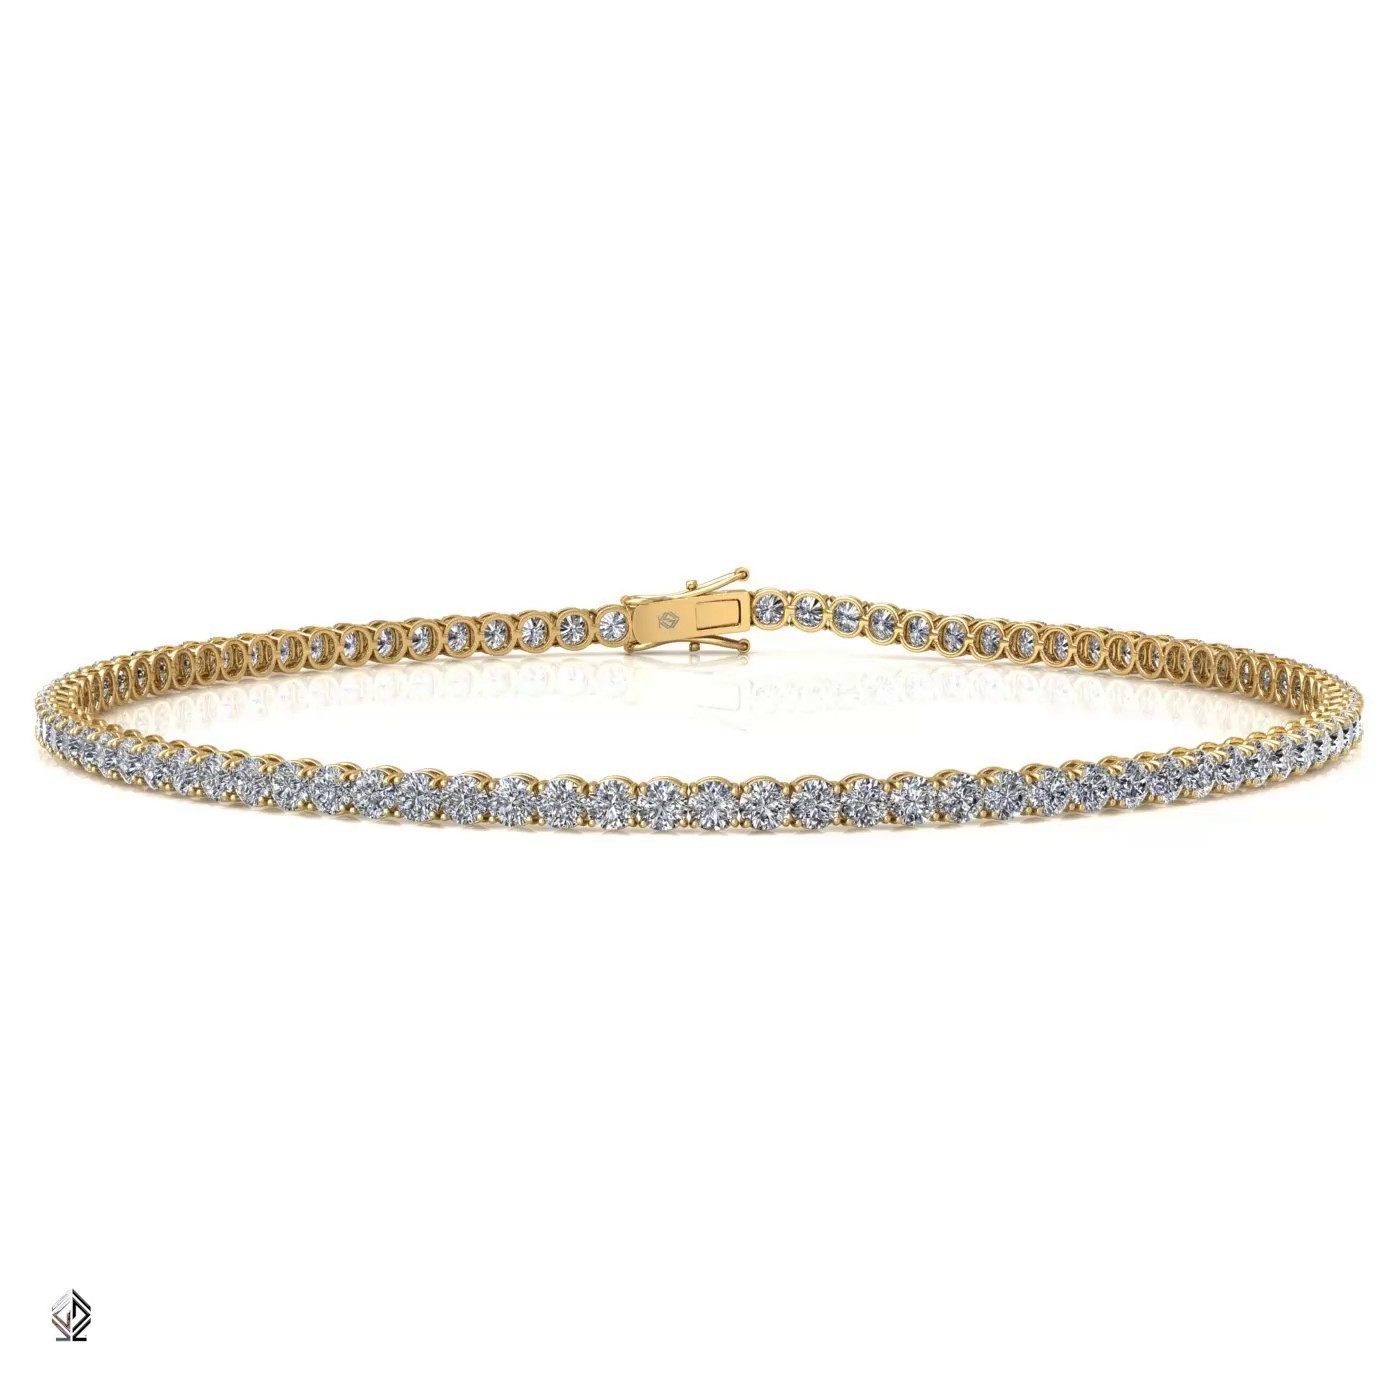 18k rose gold  1.8mm 4 prong round shape diamond tennis bracelet in round setting Photos & images